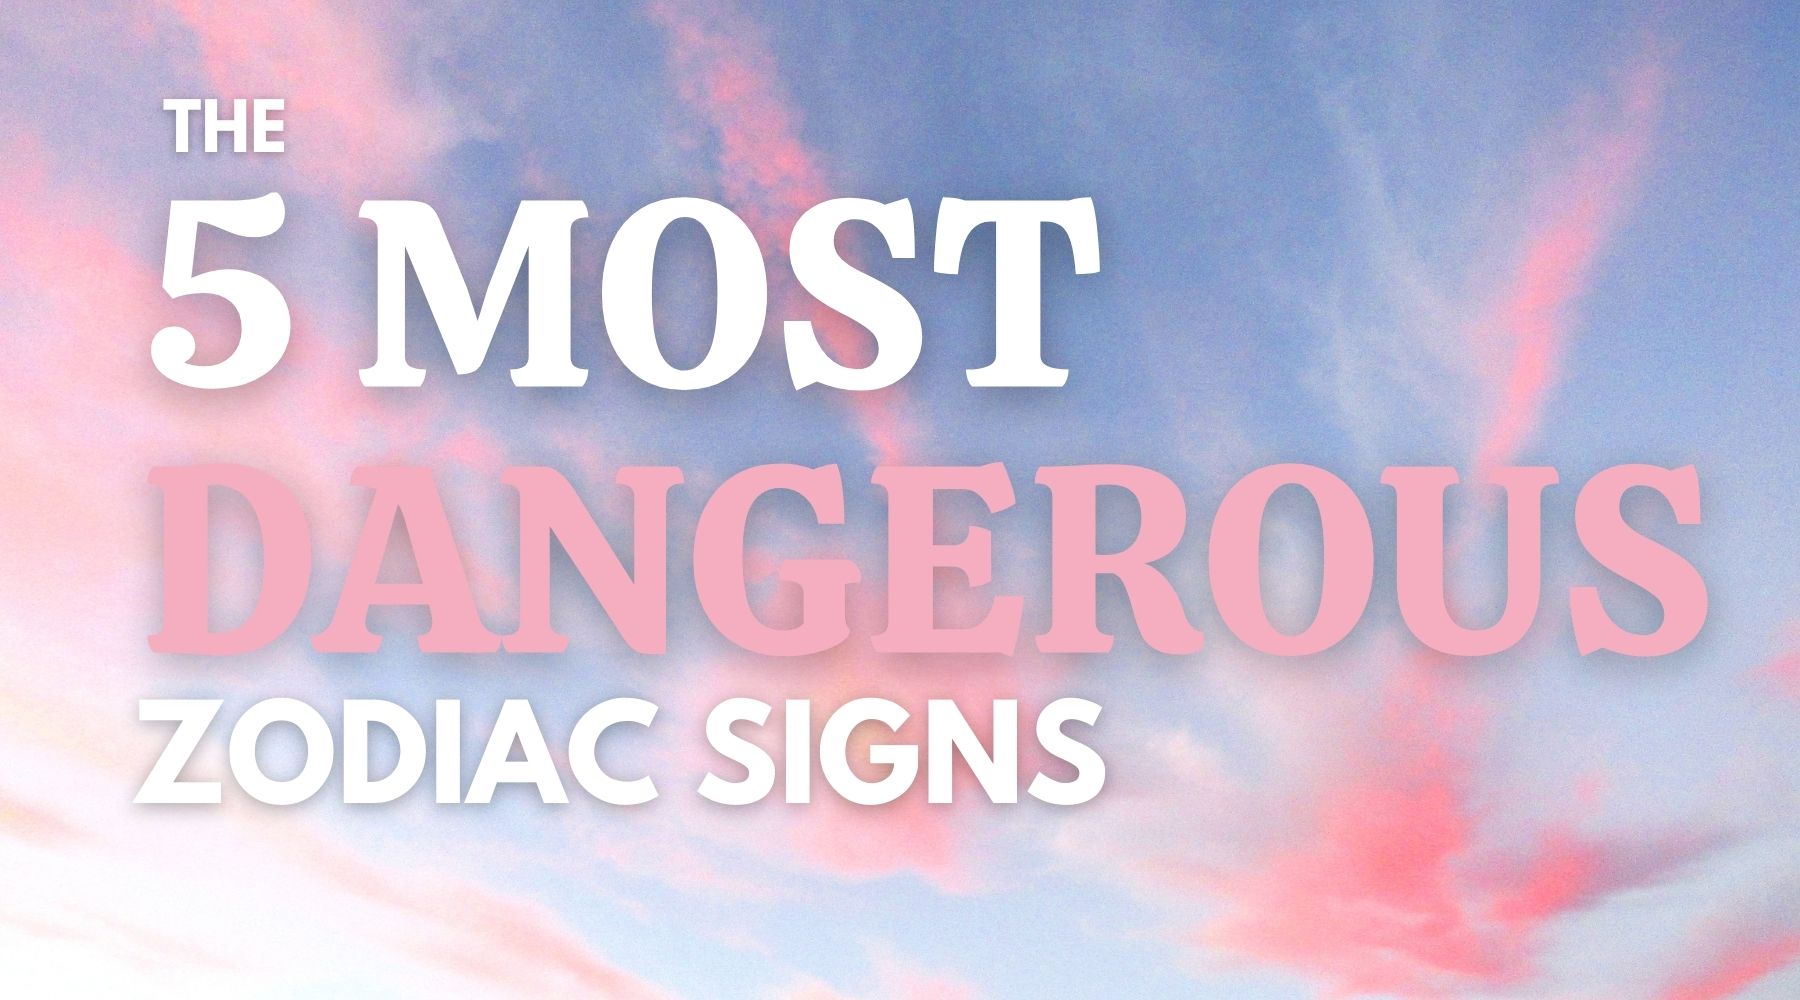 The 5 most dangerous zodiac signs-What make a zodiac sign dangerous?